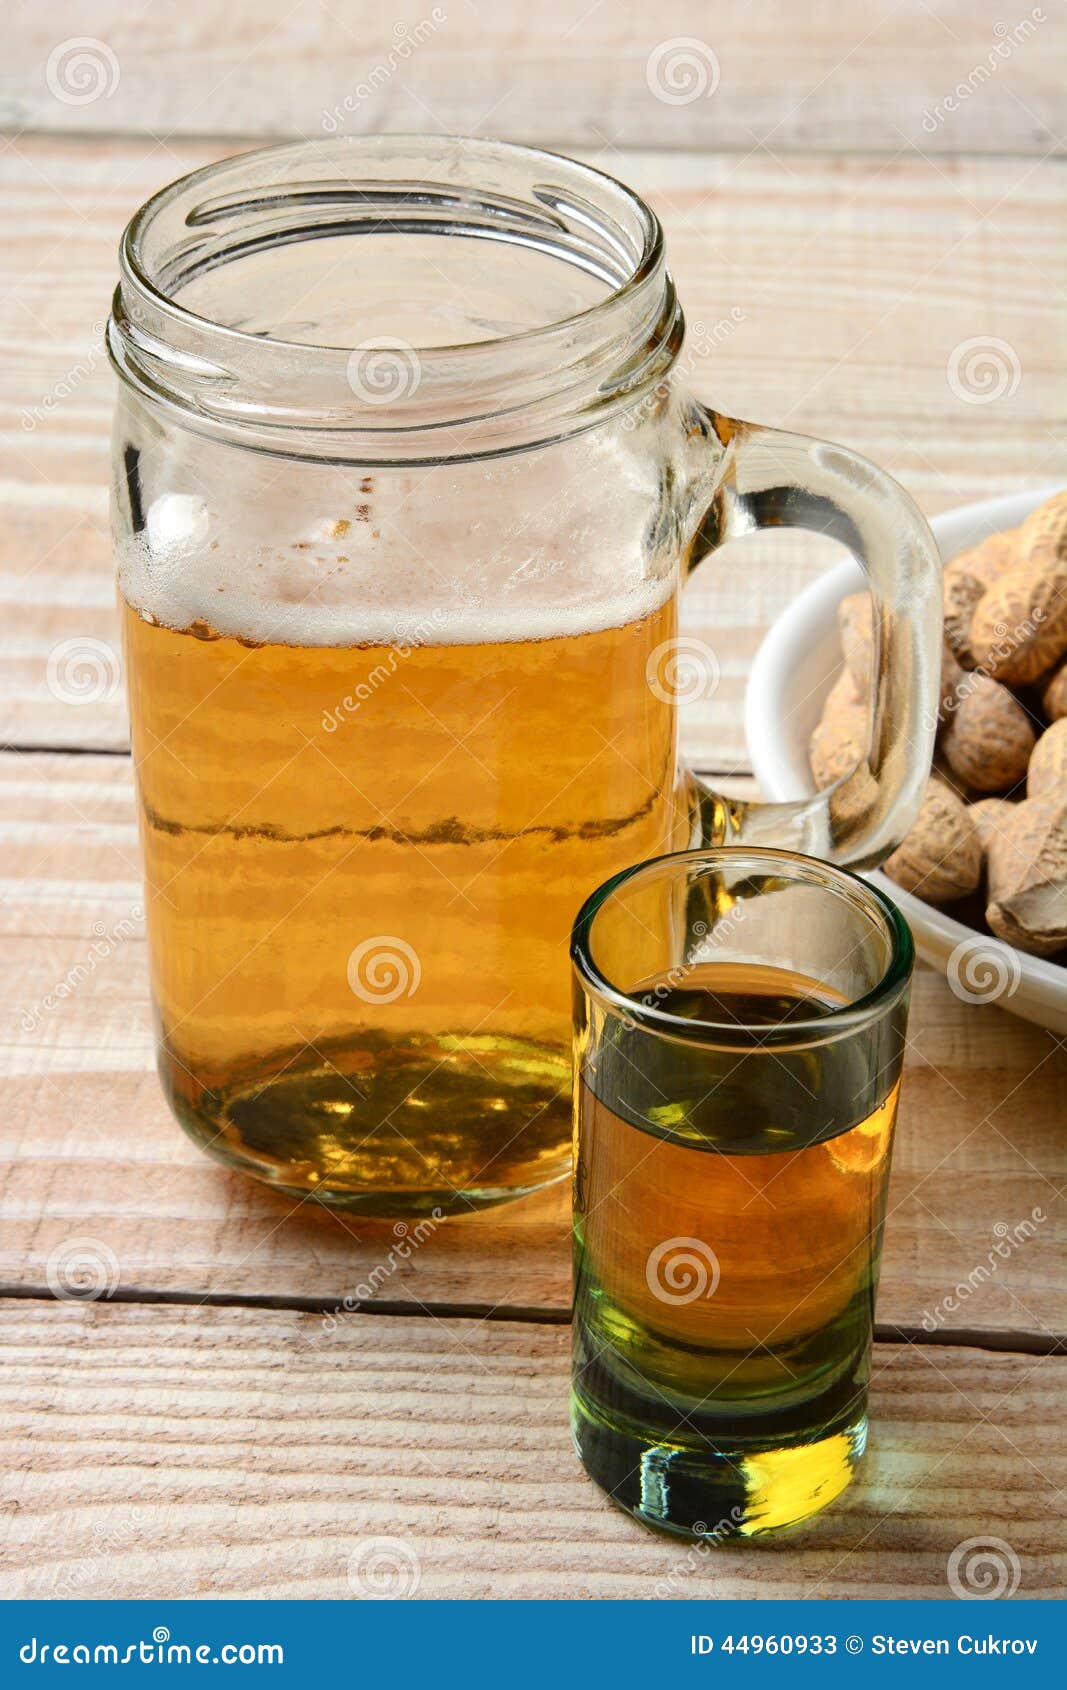 shot-beer-closeup-whiskey-mug-bowl-peanuts-vertical-format-rustic-wood-table-44960933.jpg